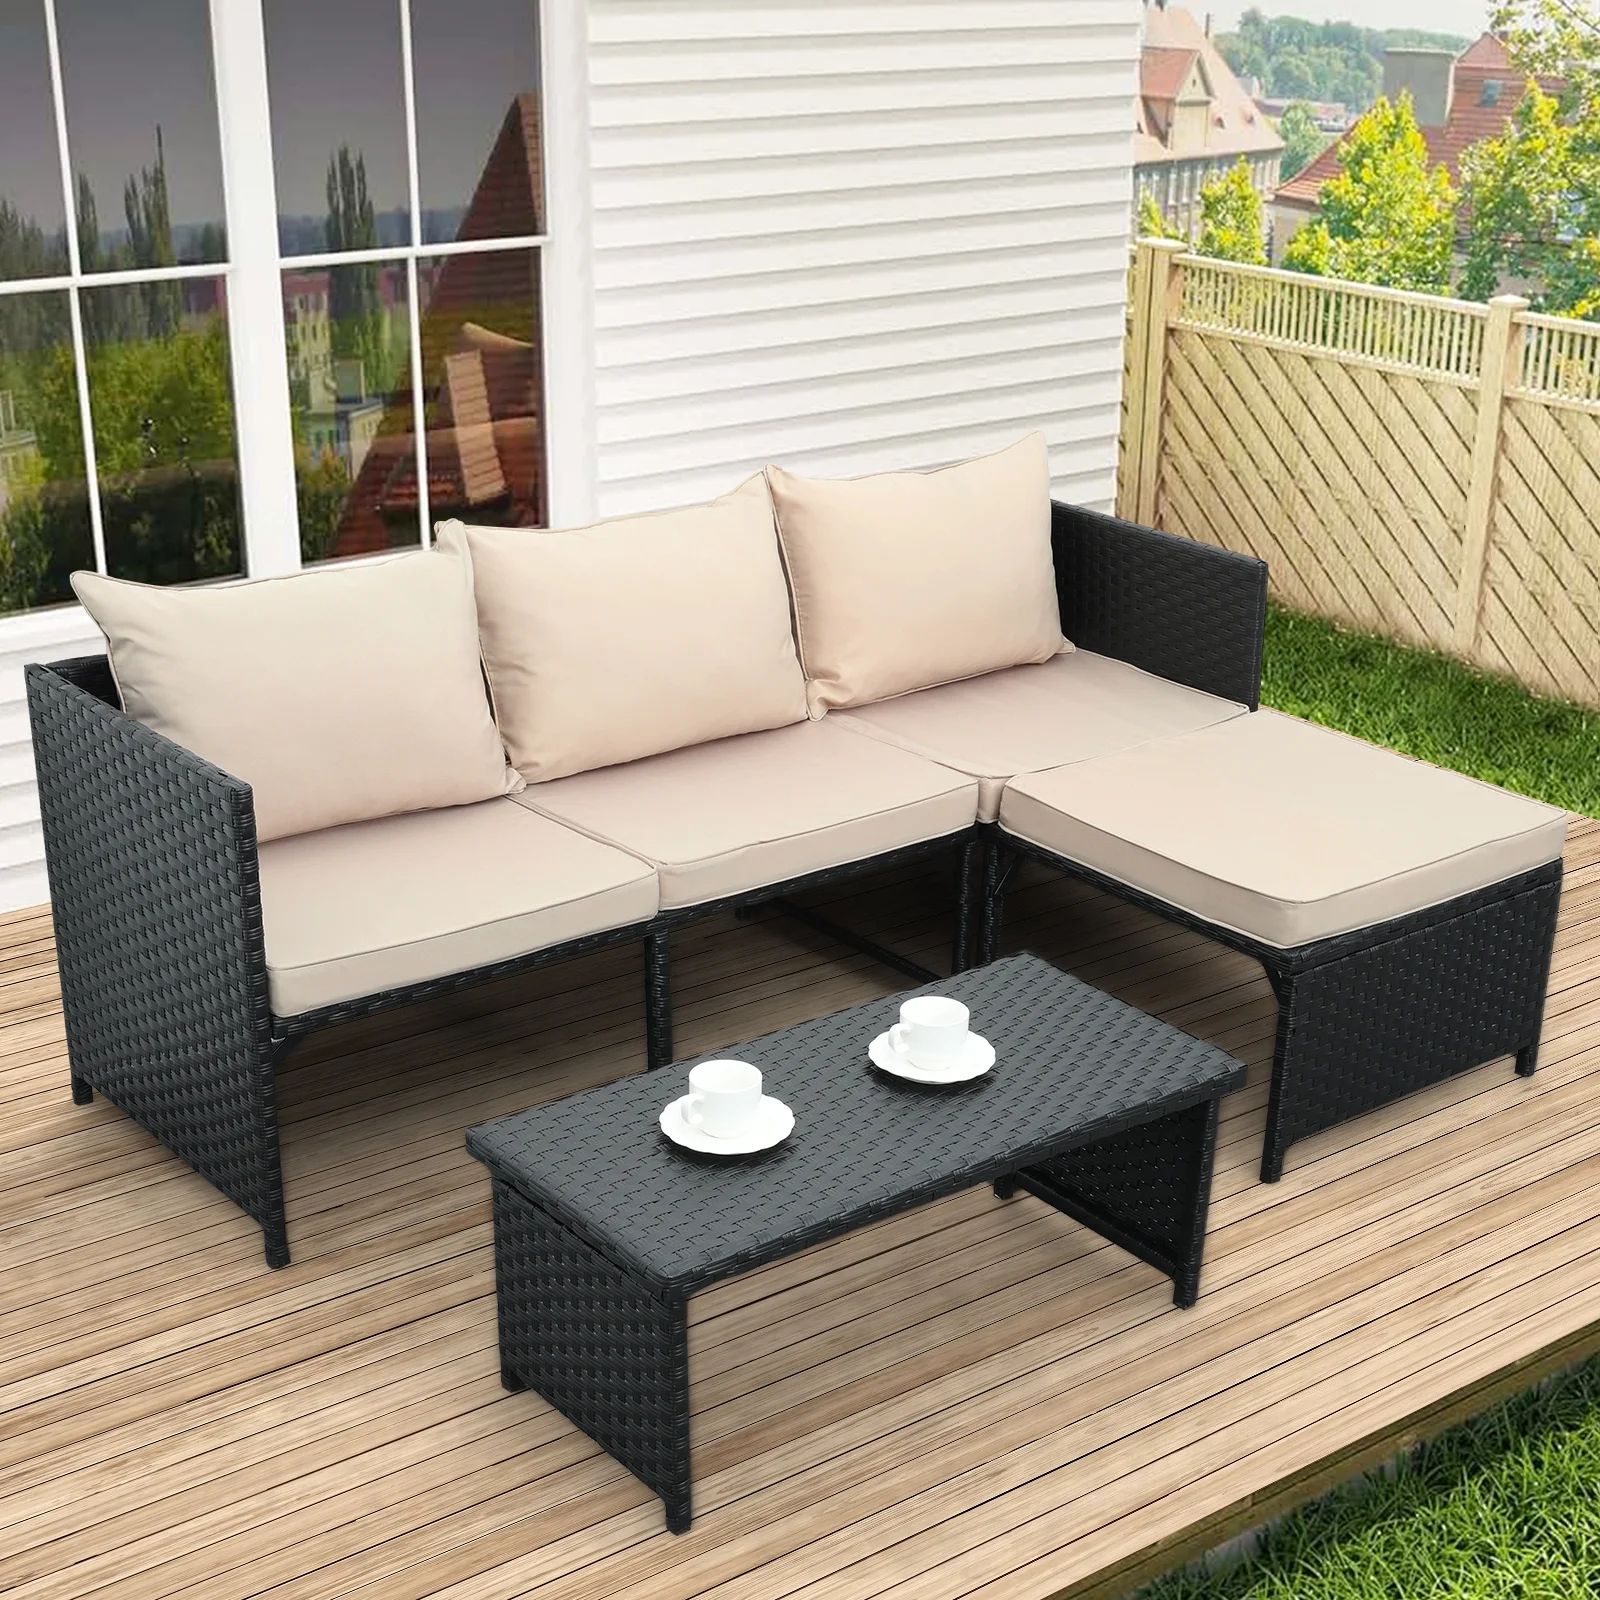 Waroom 3 Pieces Patio Conversation Sets Outdoor Wicker Furniture with Coffee Table,Khaki, Powder ... | Walmart (US)